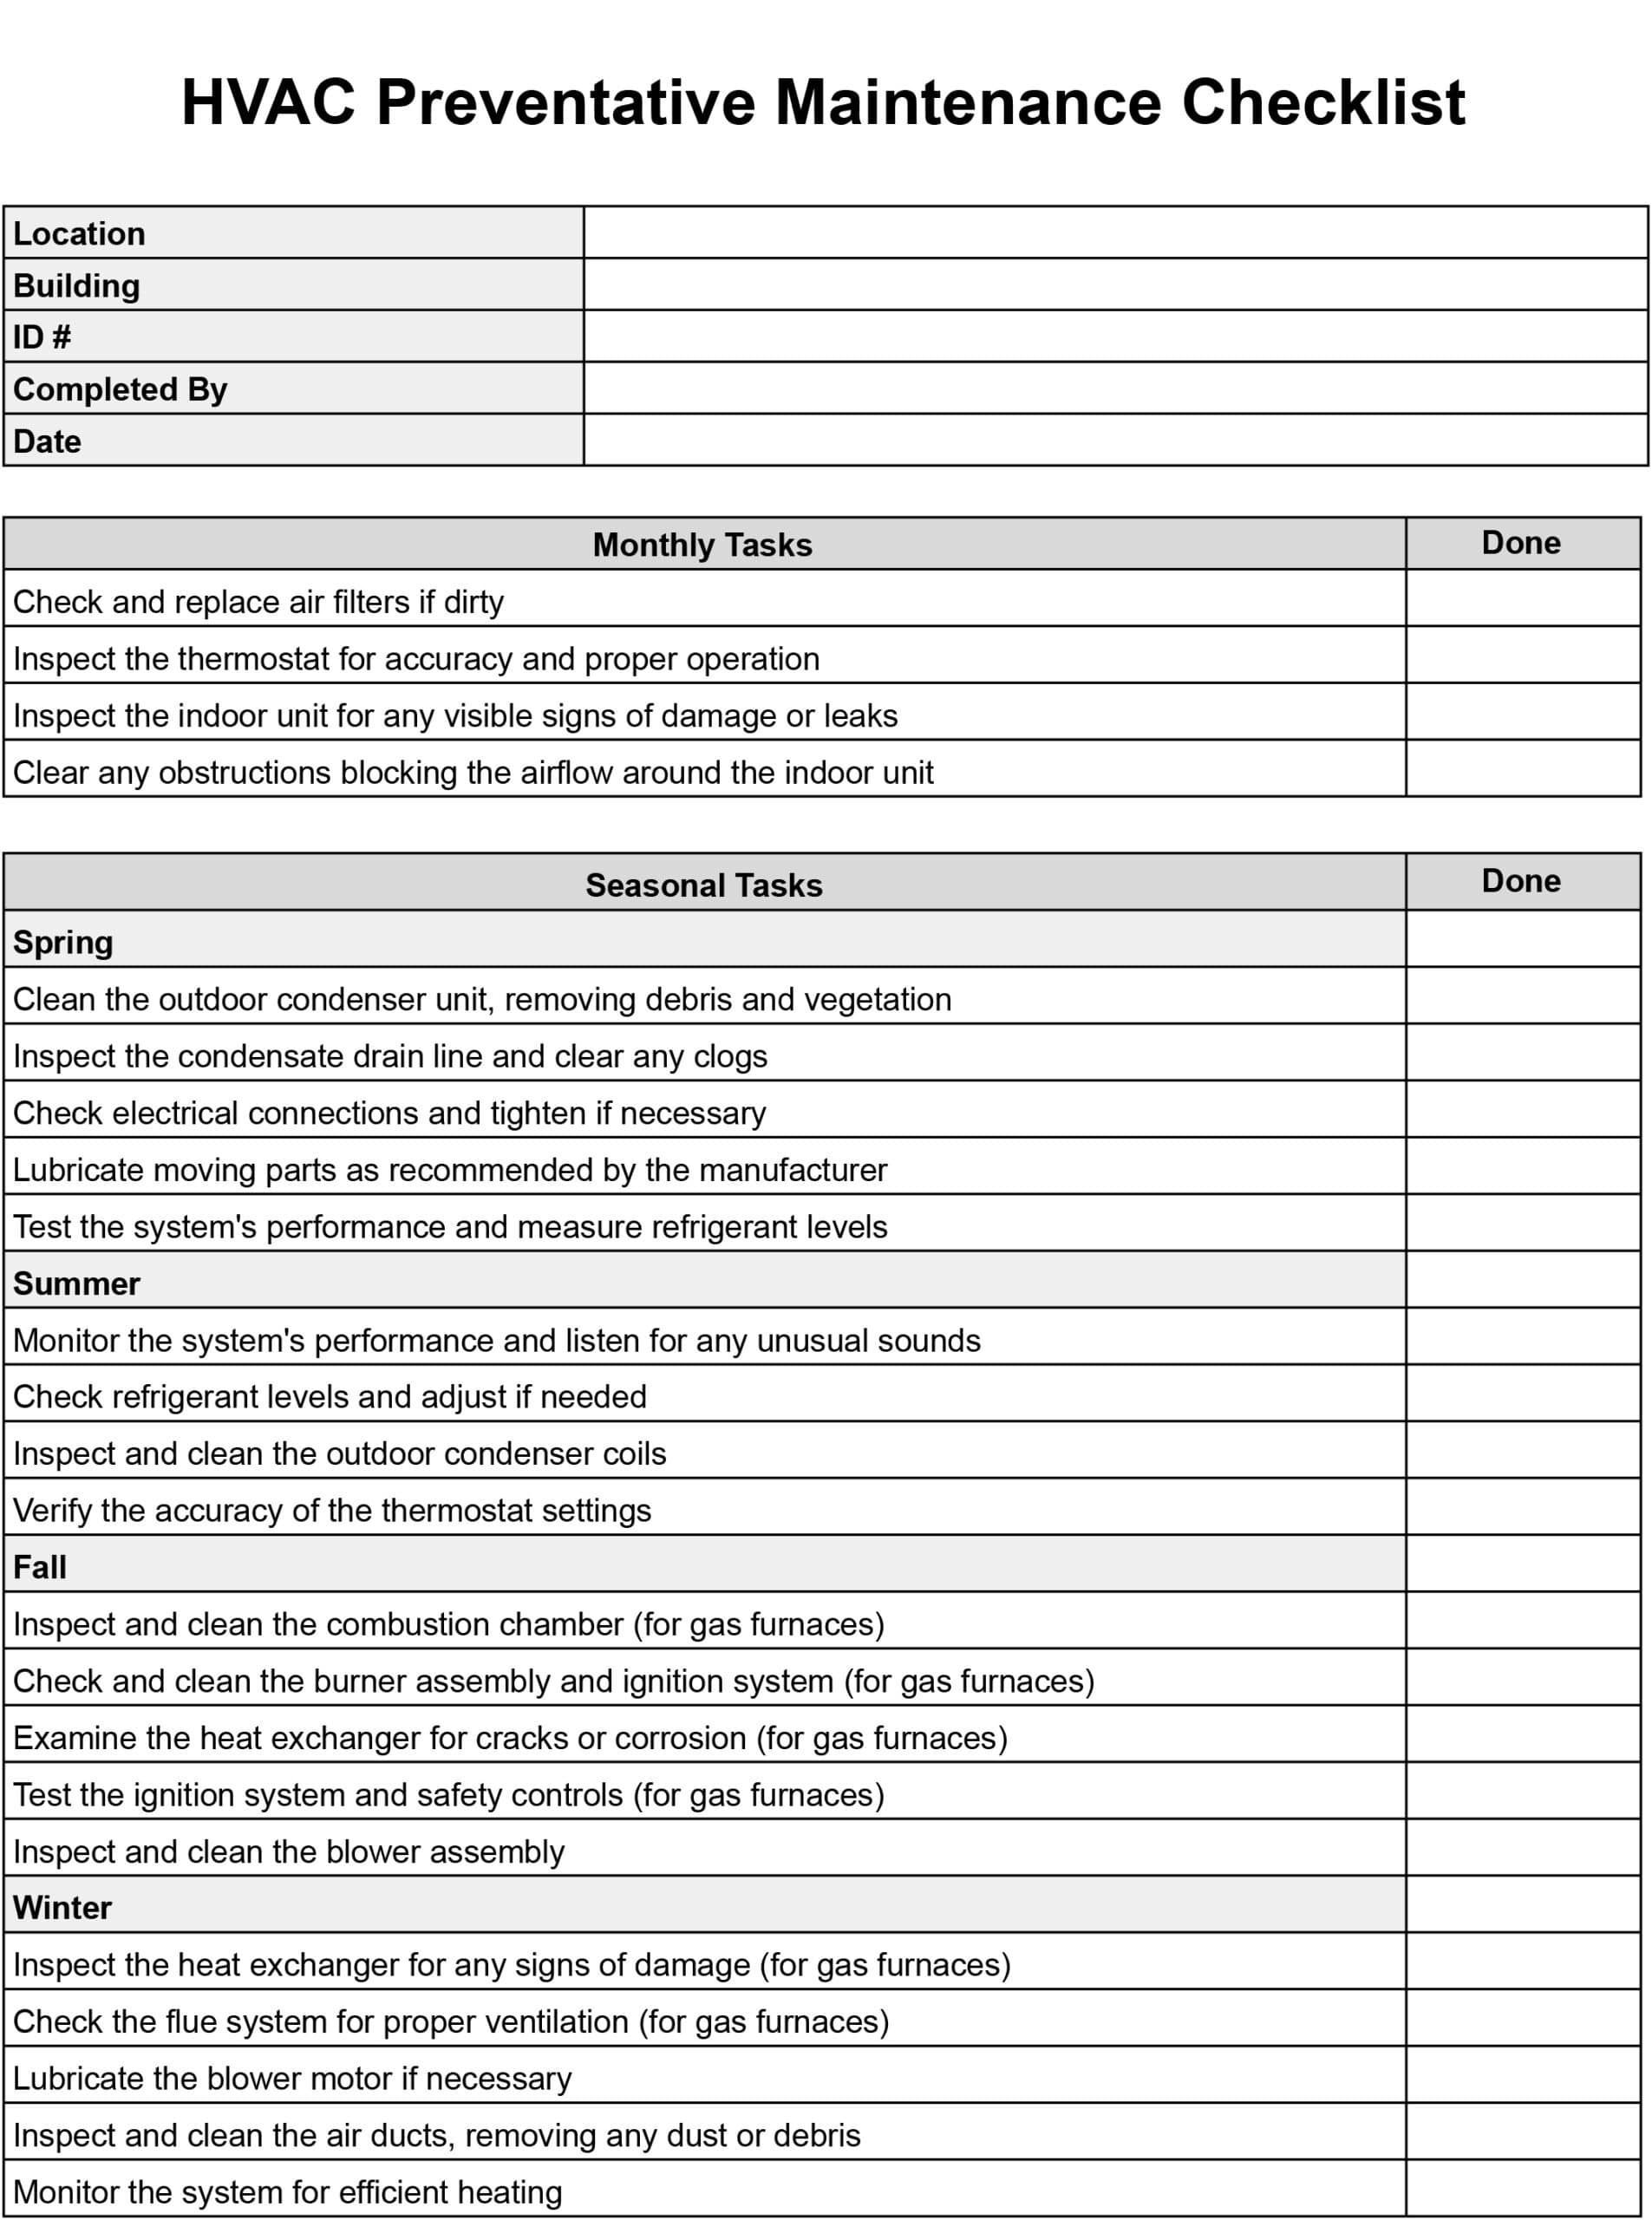 HVAC Maintenance Checklist Templates Download Print For Free 